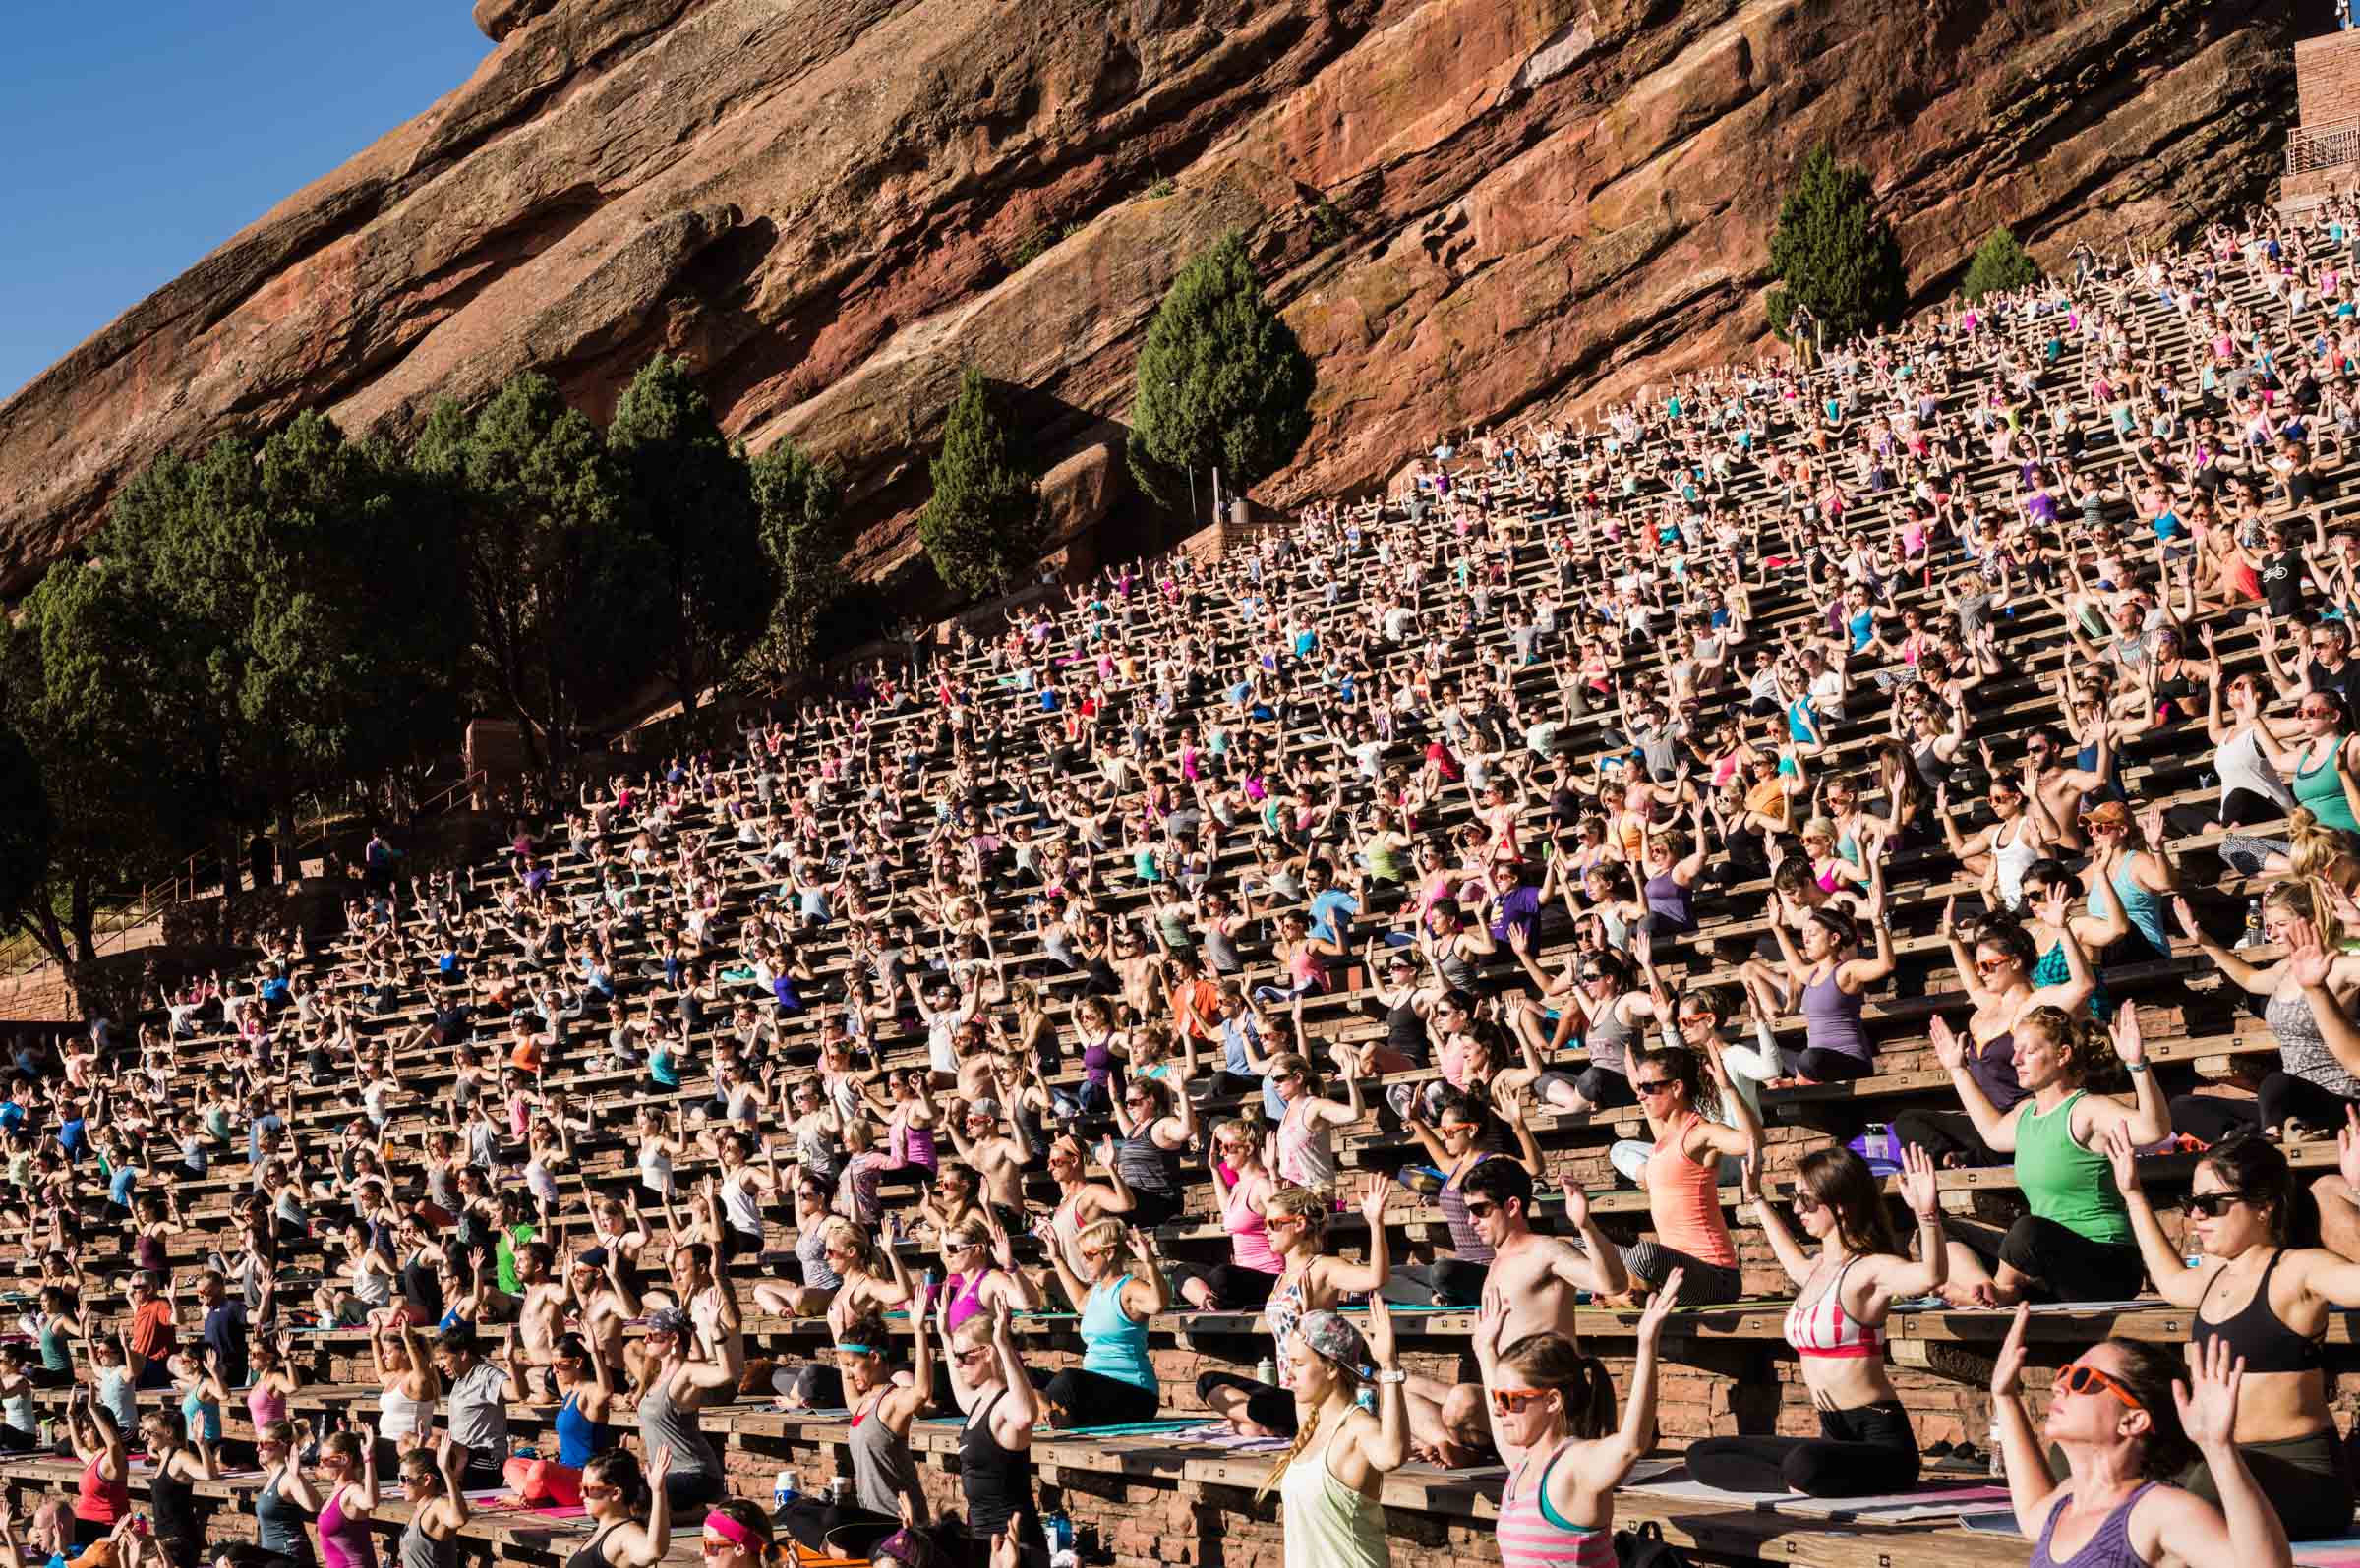 Yoga on the Rocks, Colorado, United States, 2015. 